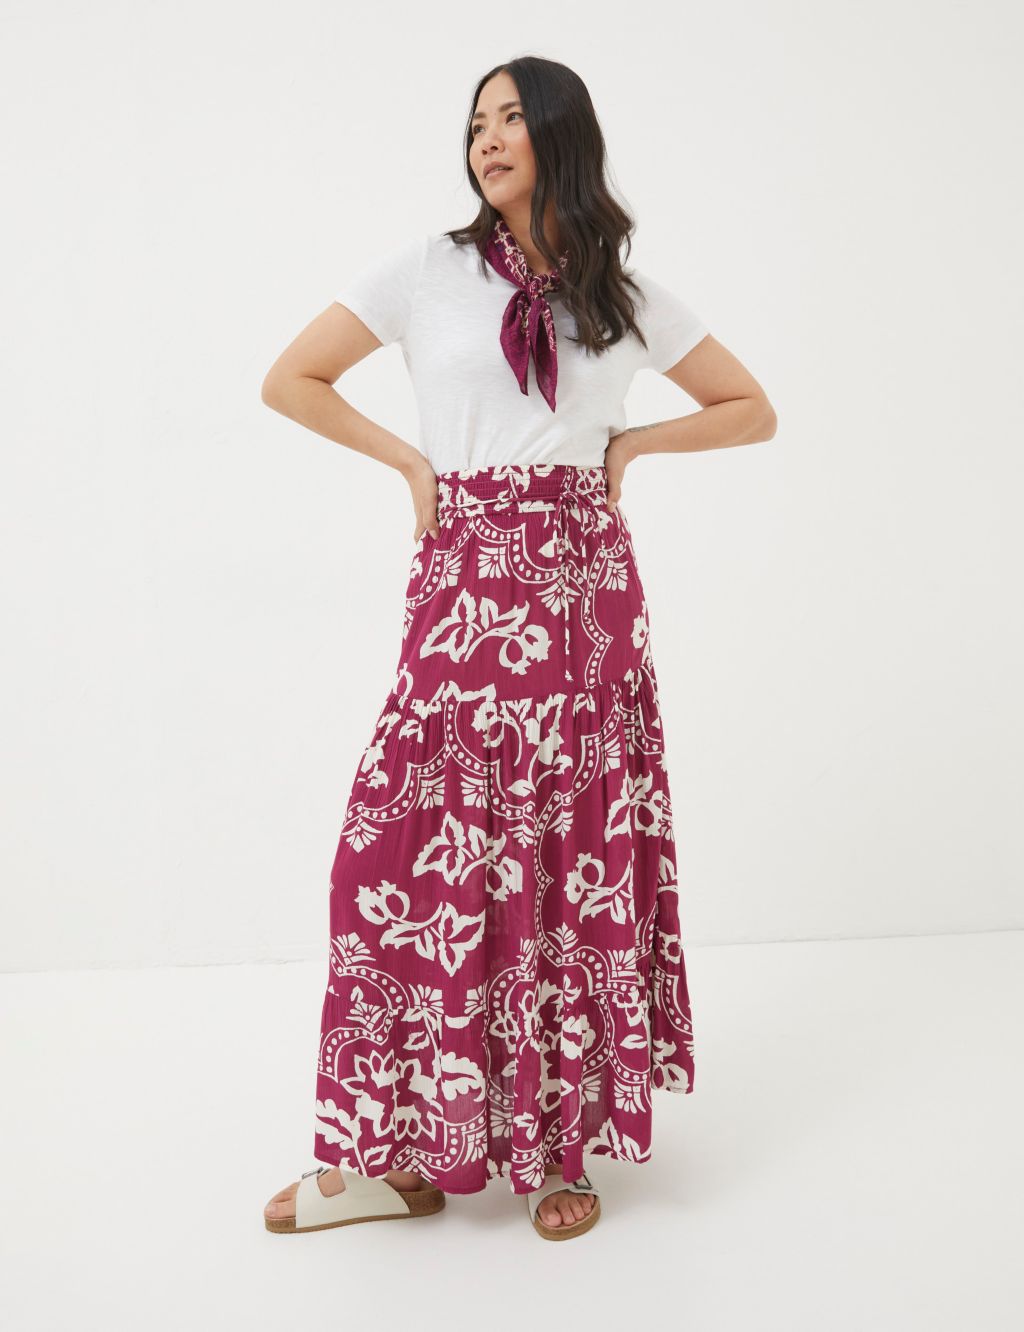 Floral Maxi A-Line Skirt